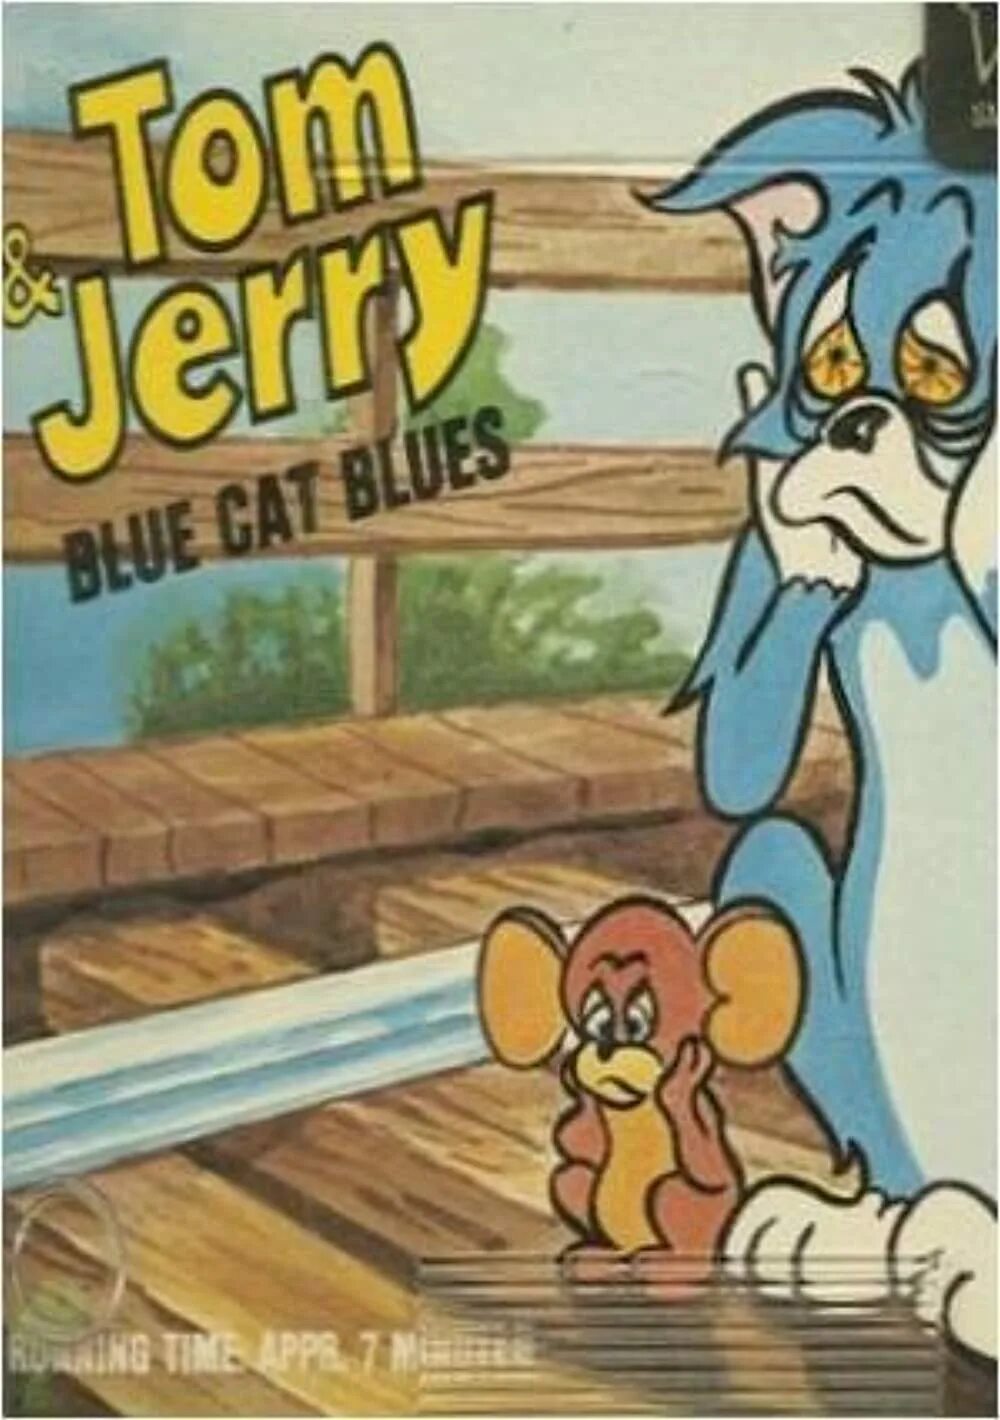 Blue tom. Blue Cat Blues 1956. Tom and Jerry Blue Cat Blues. Том и Джерри блюз грустного кота. Tom and Jerry - Blue Cat Blues фото.